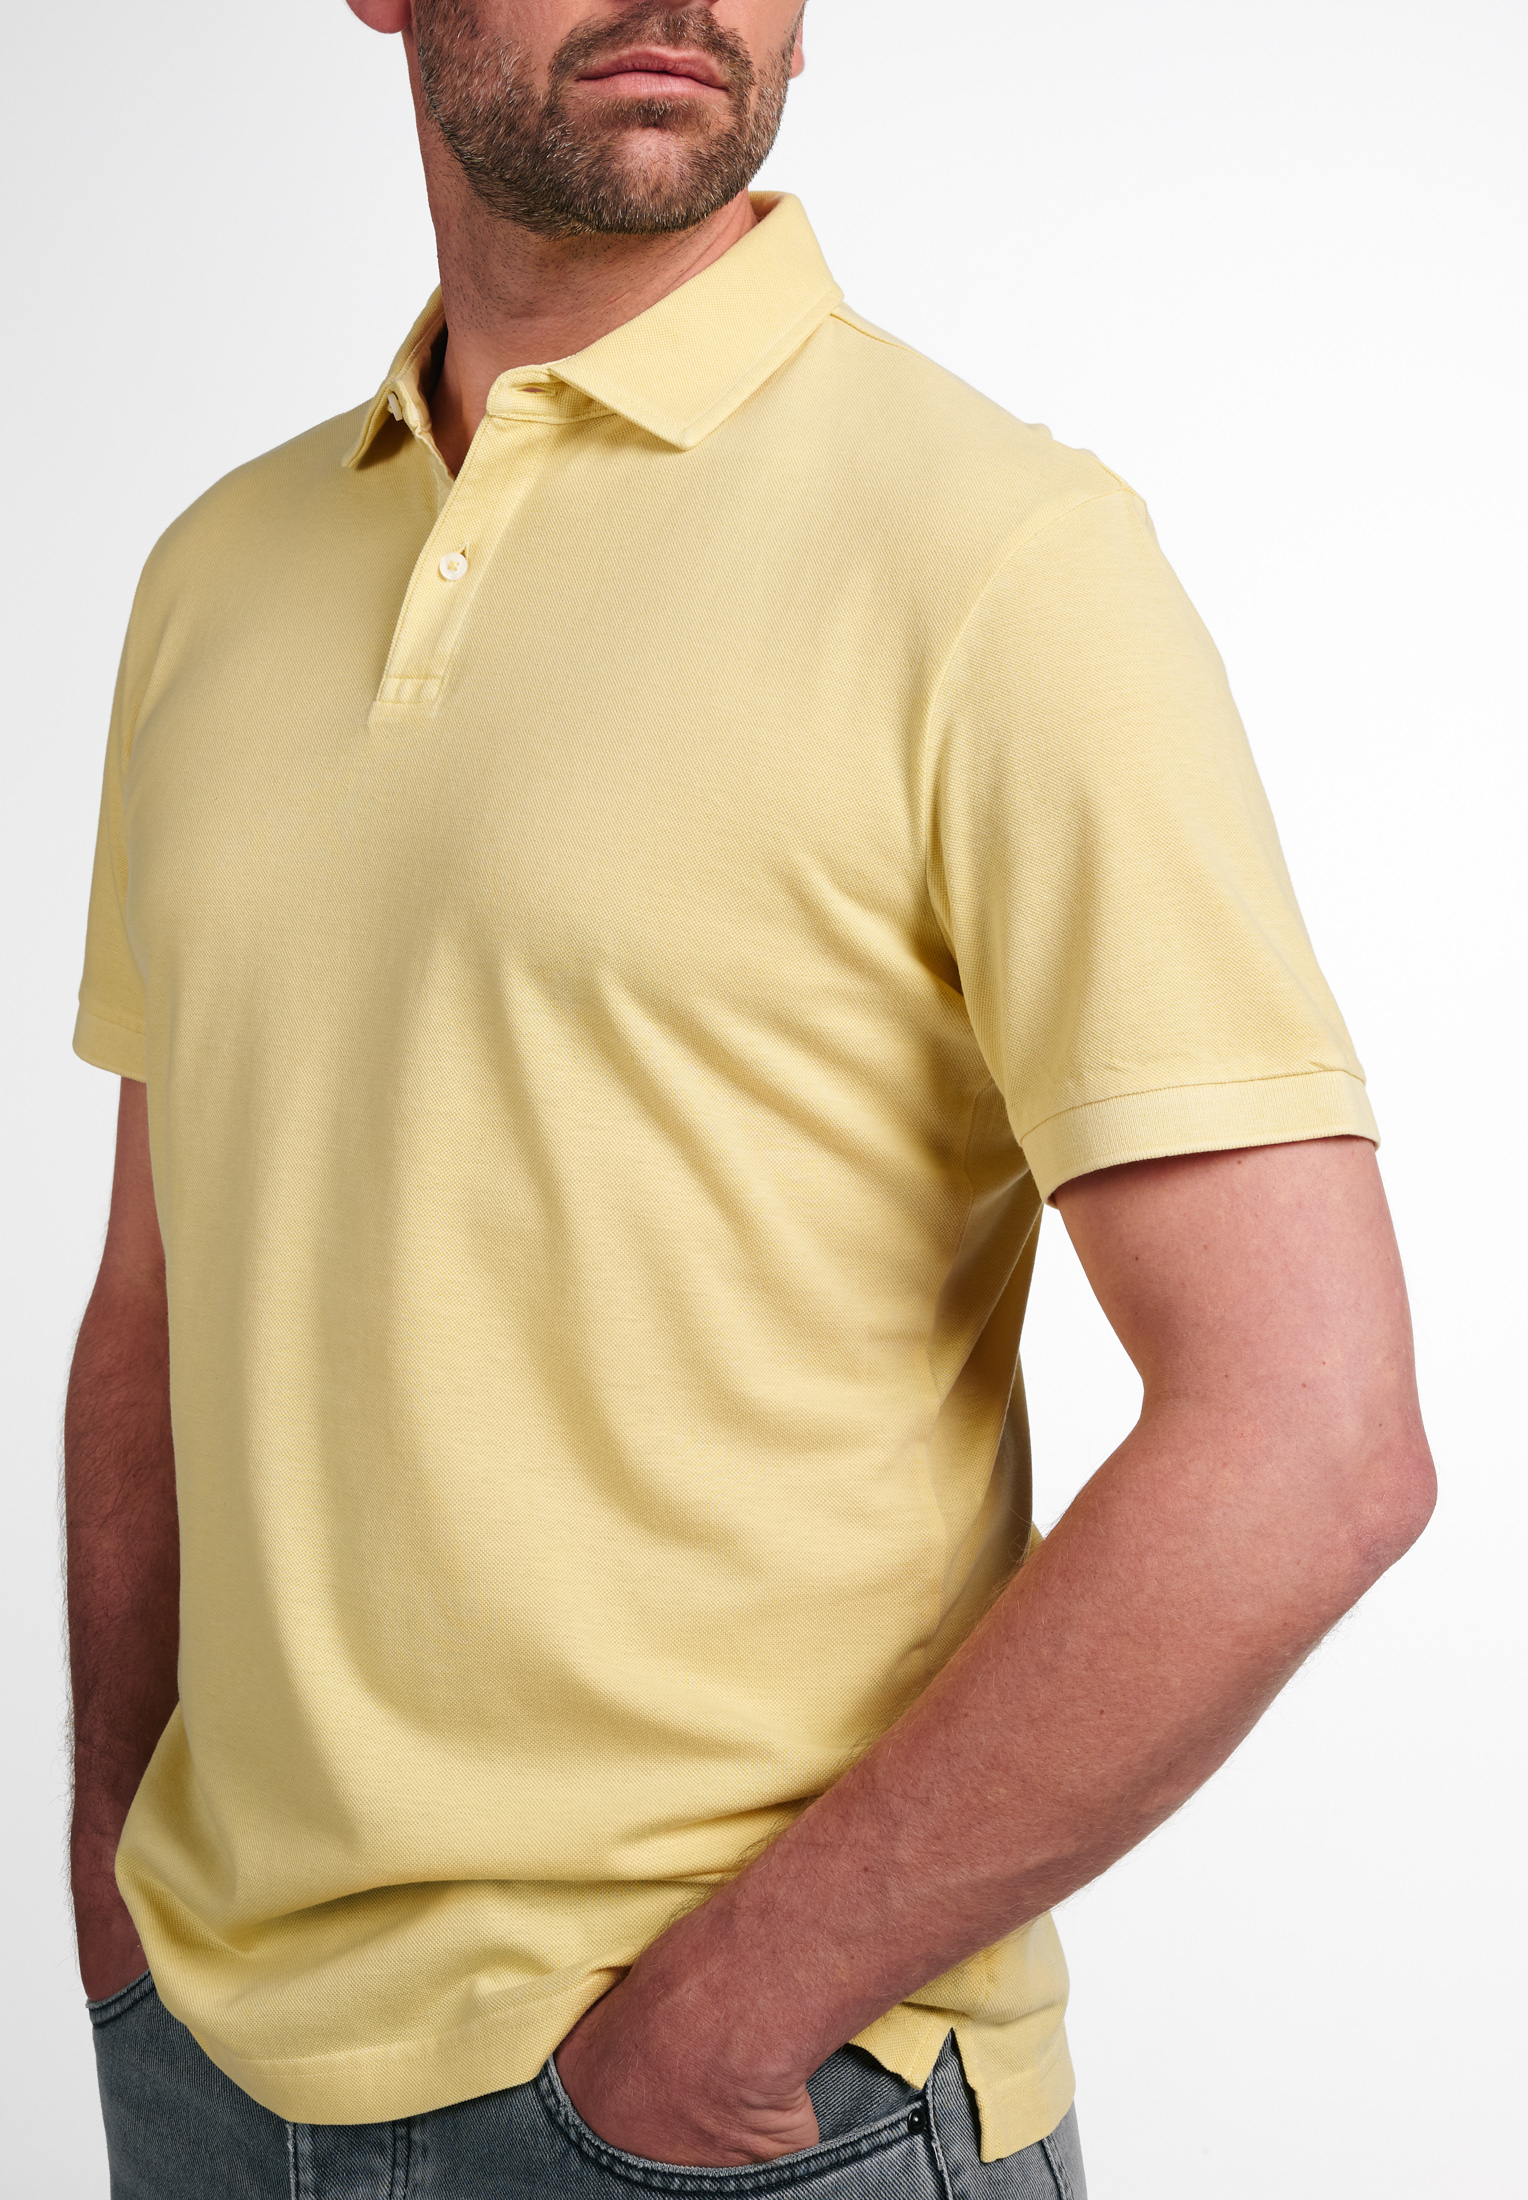 FIT gelb unifarben | 1SP00087-07-01-4XL-1/2 Poloshirt 4XL MODERN | Kurzarm gelb | in |